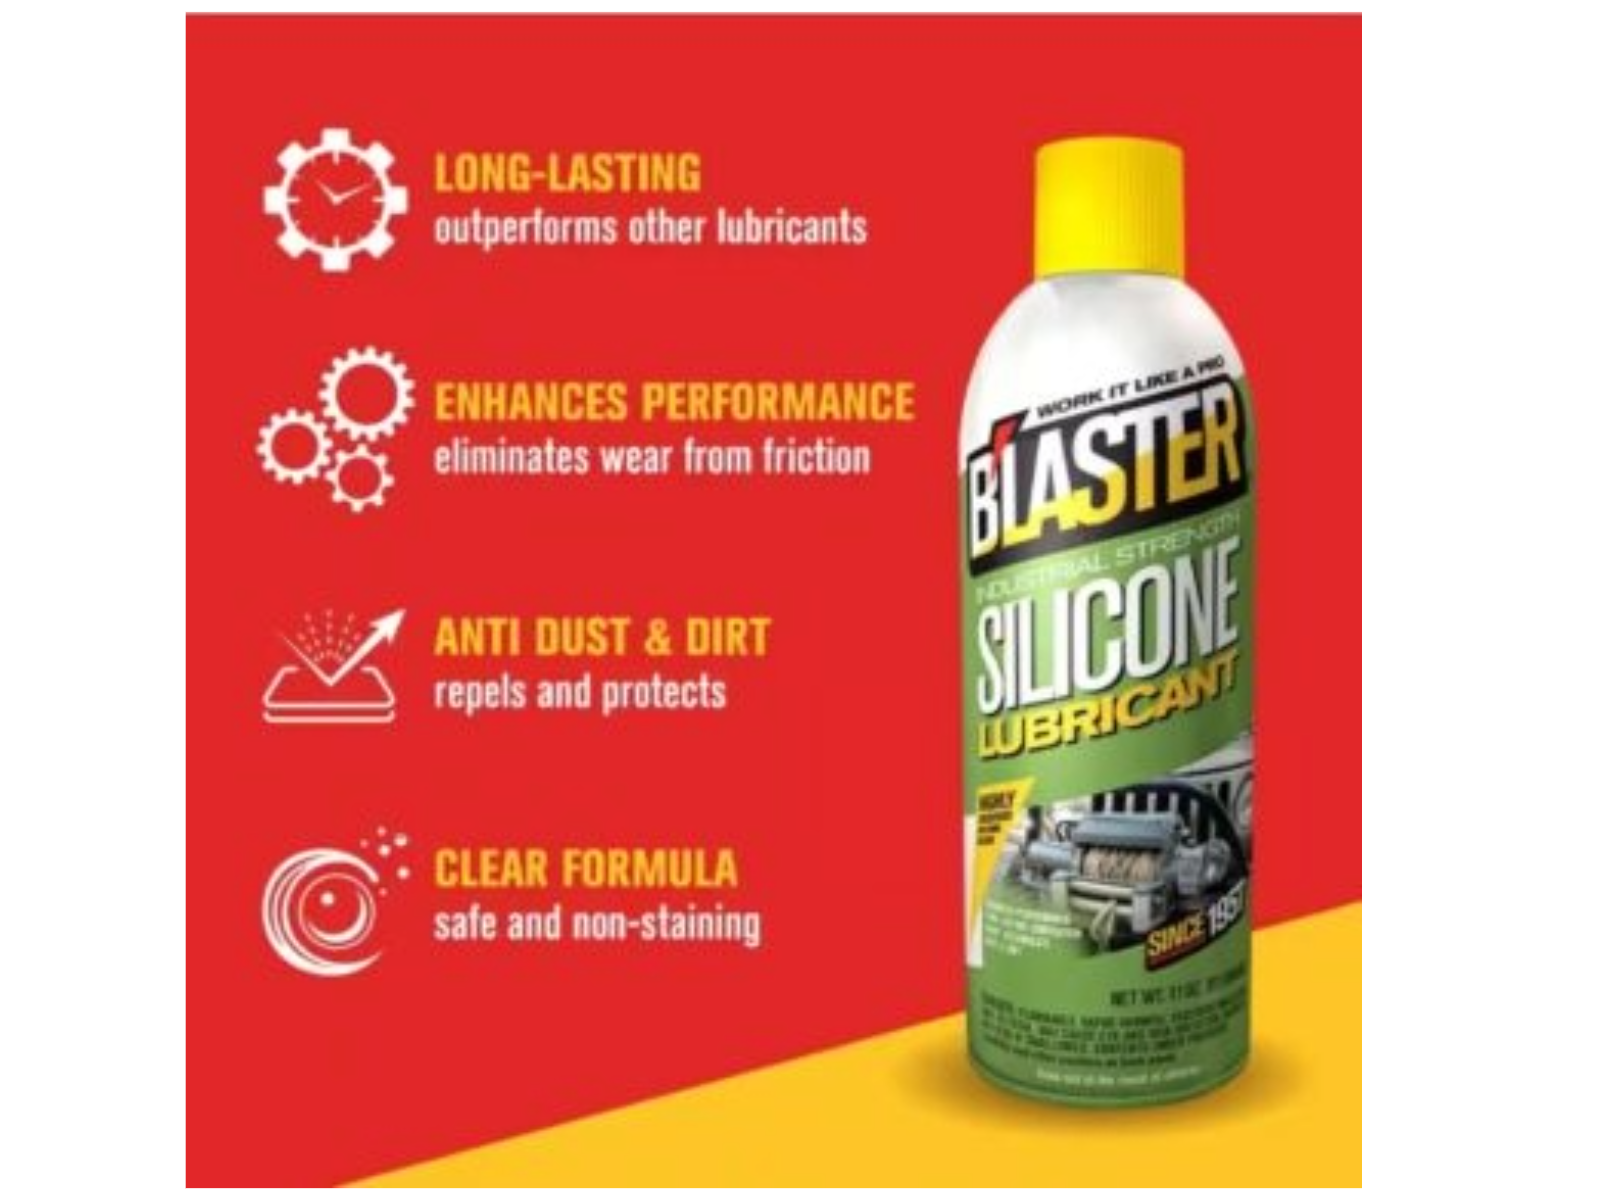 Blaster Industrial Strength Silicone Lubricant Spray, 11 oz. 1